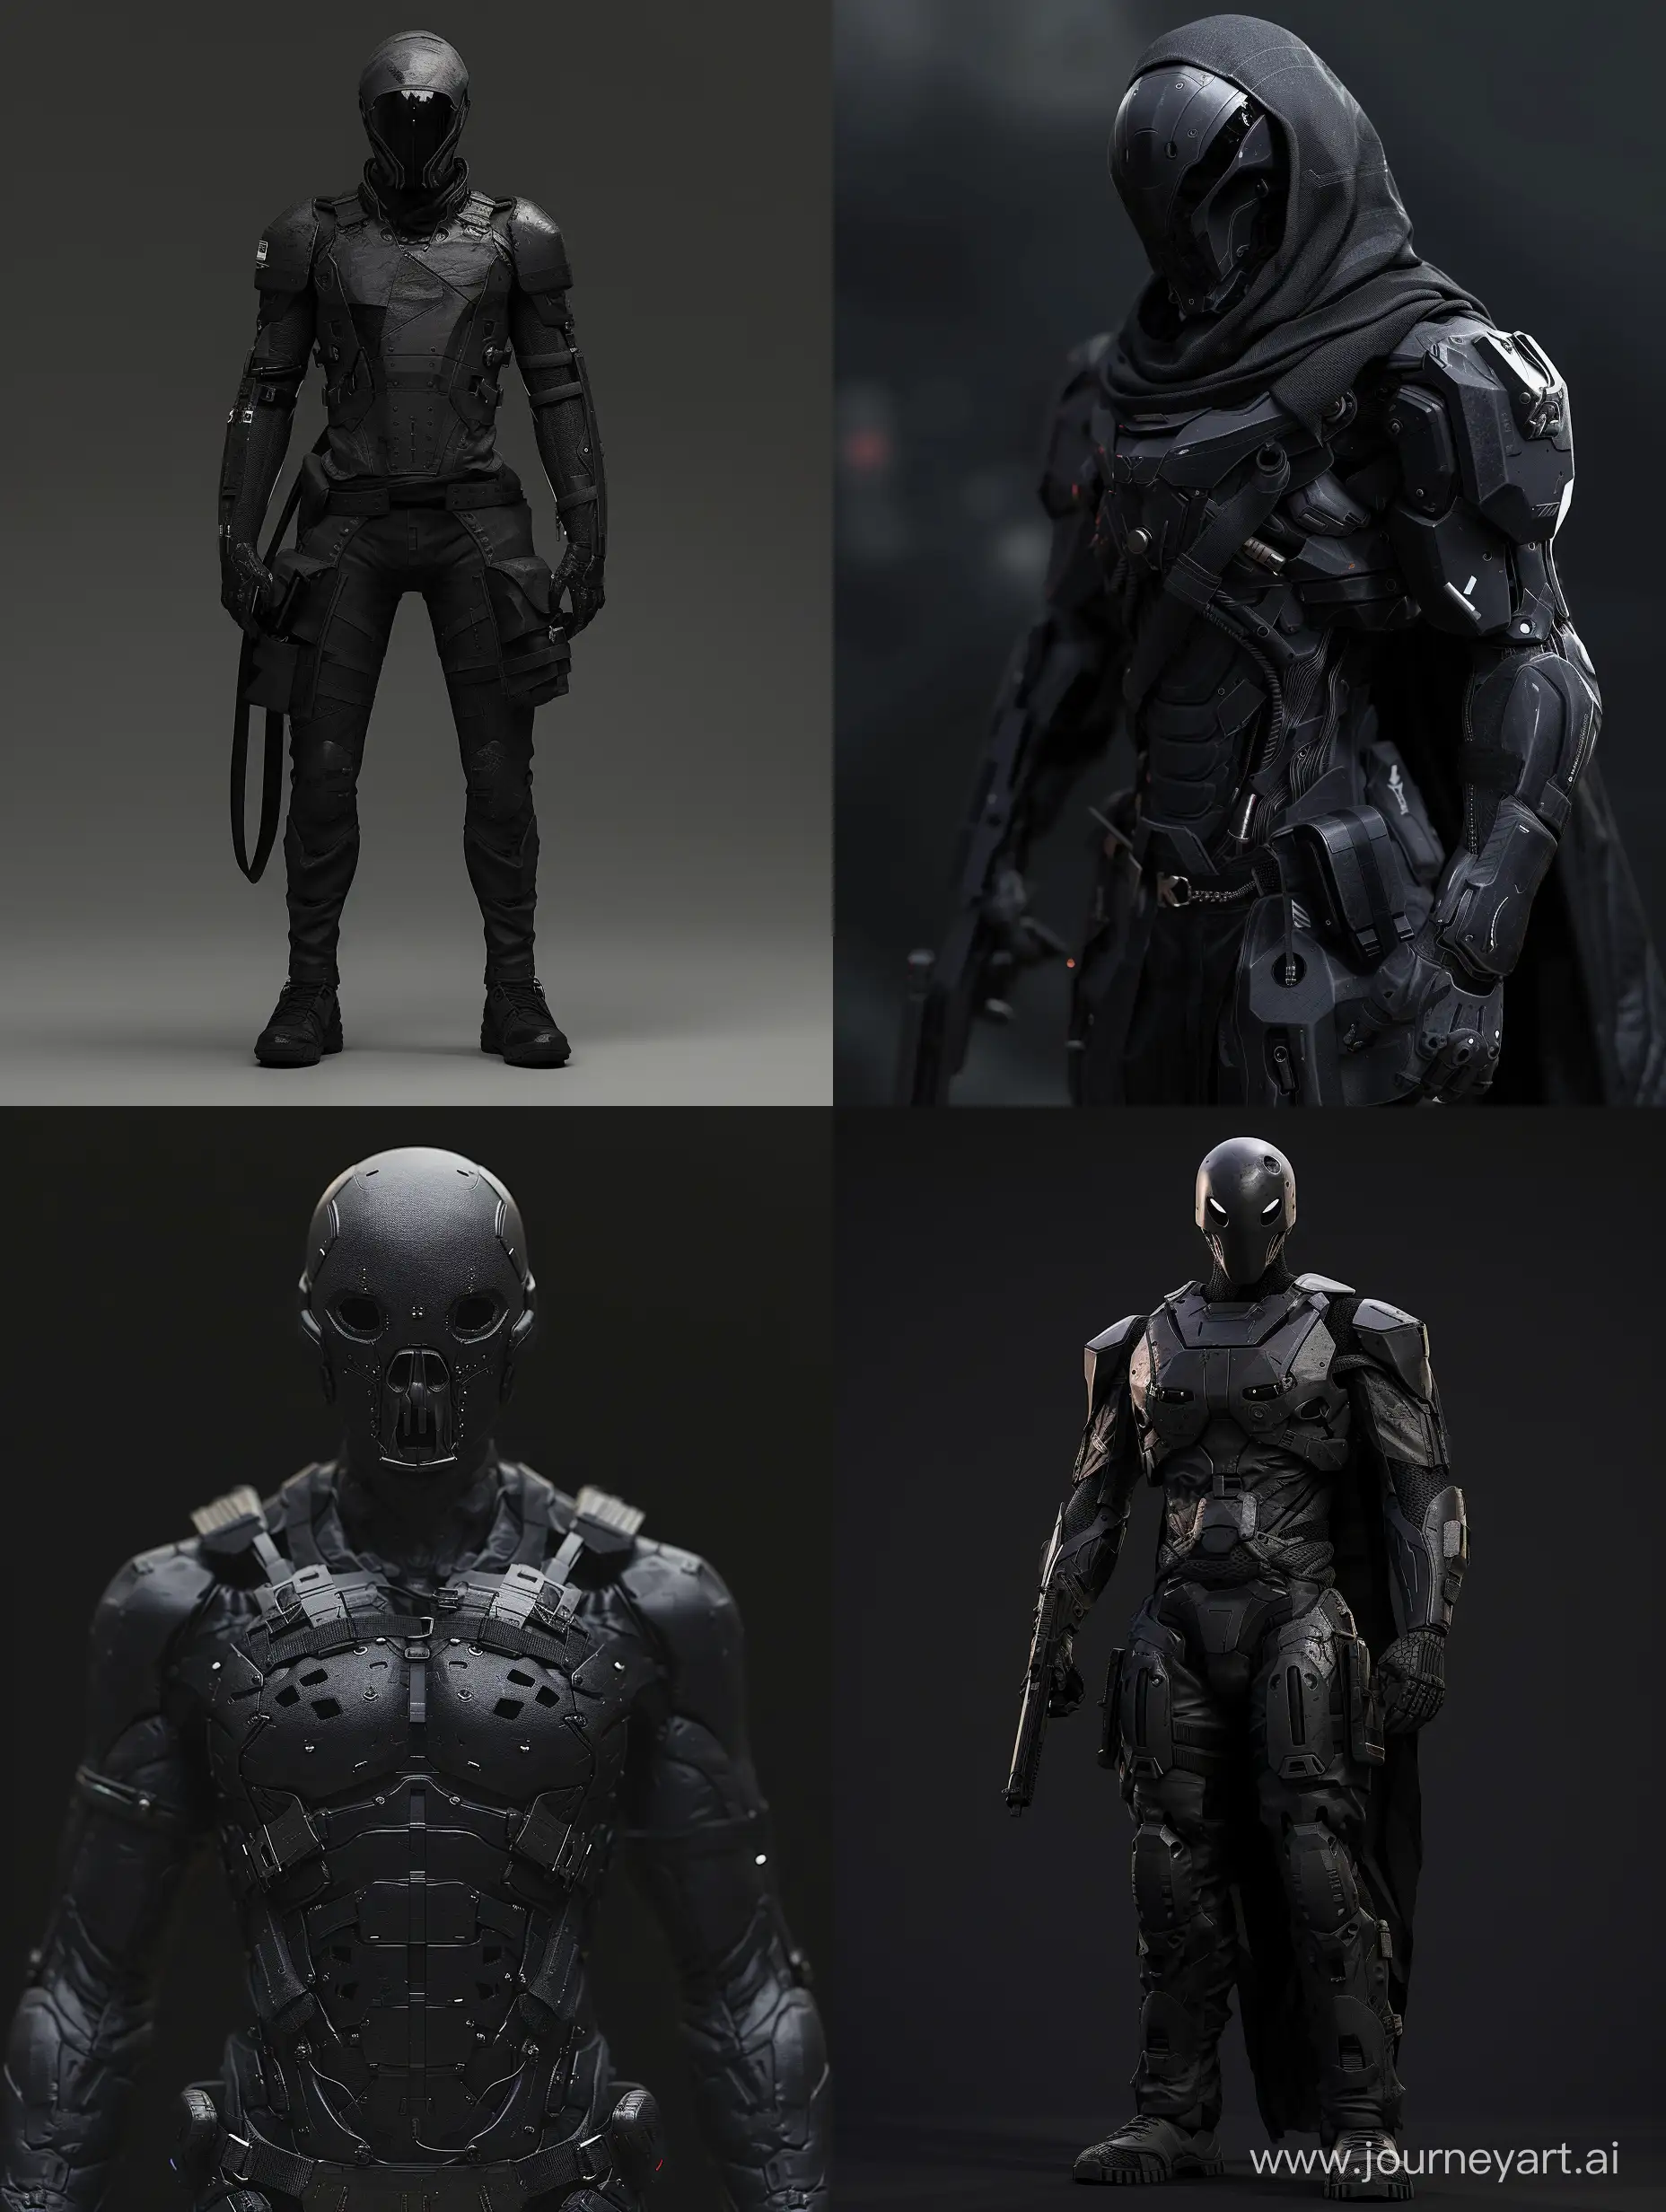 Futuristic-Cyberpunk-Soldier-with-Reaper-Mask-in-Westworldinspired-Scene